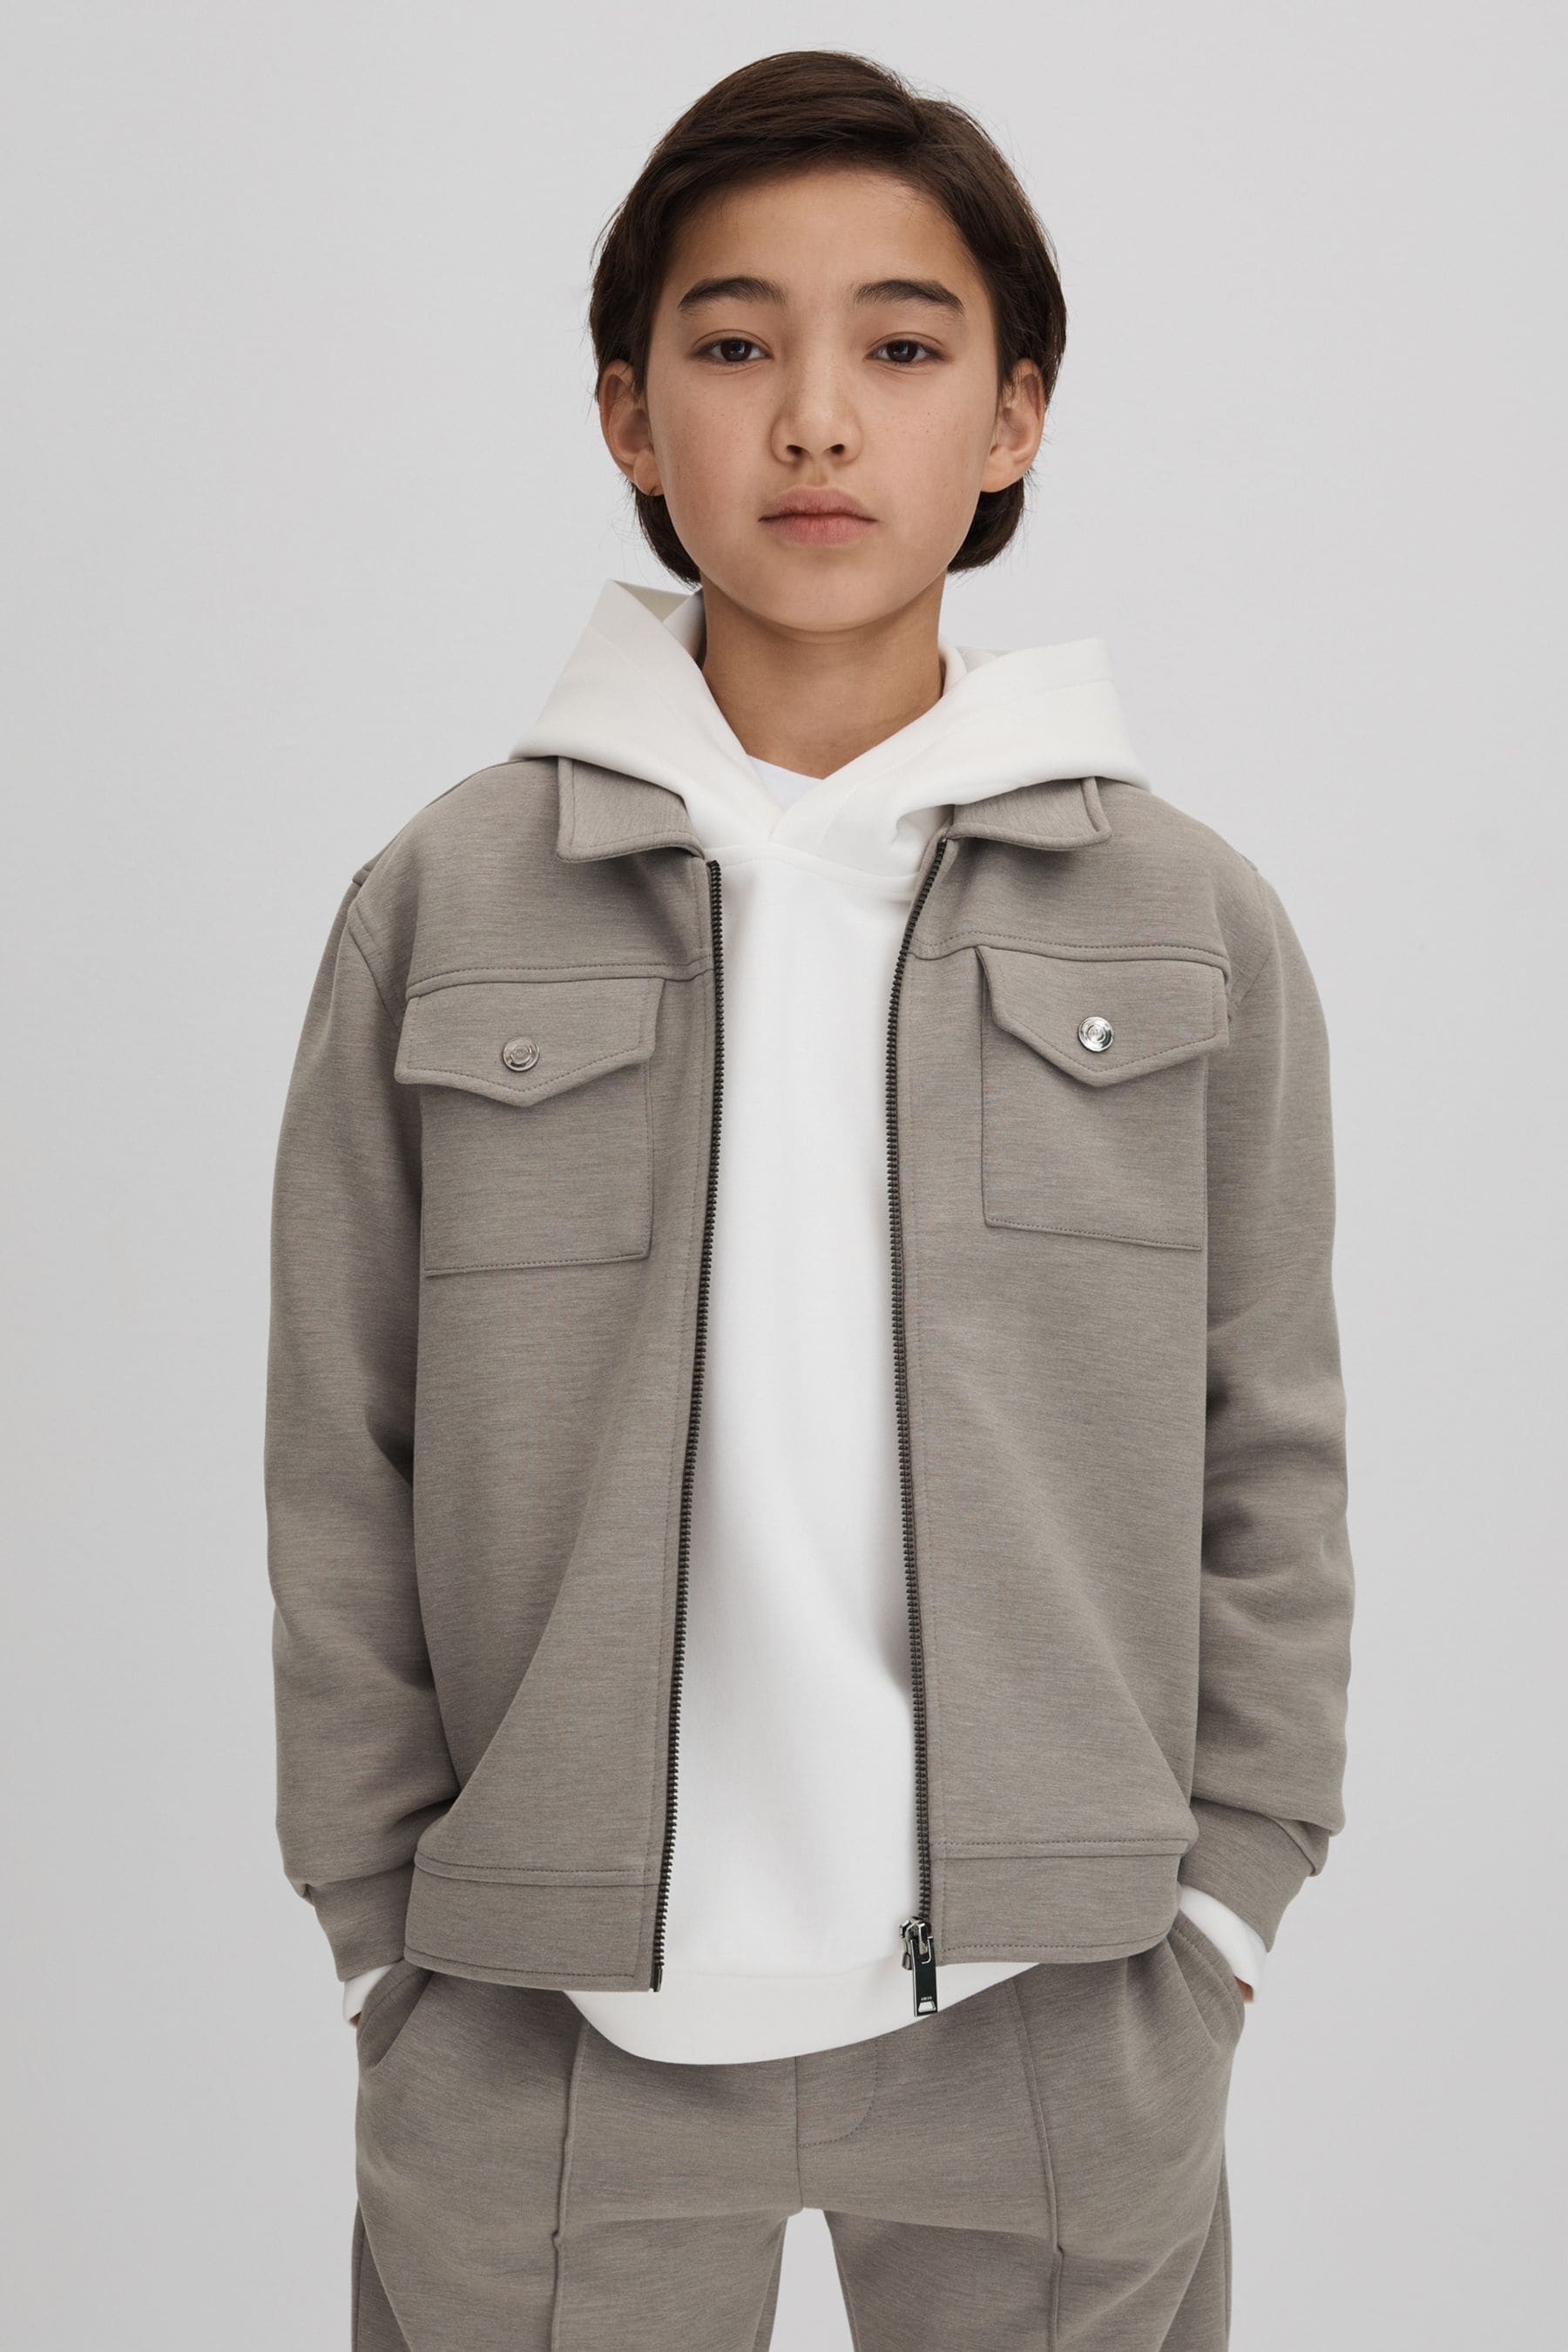 Reiss Kids' Medina - Taupe Junior Interlock Jersey Zip-through Jacket, 6 - 7 Years